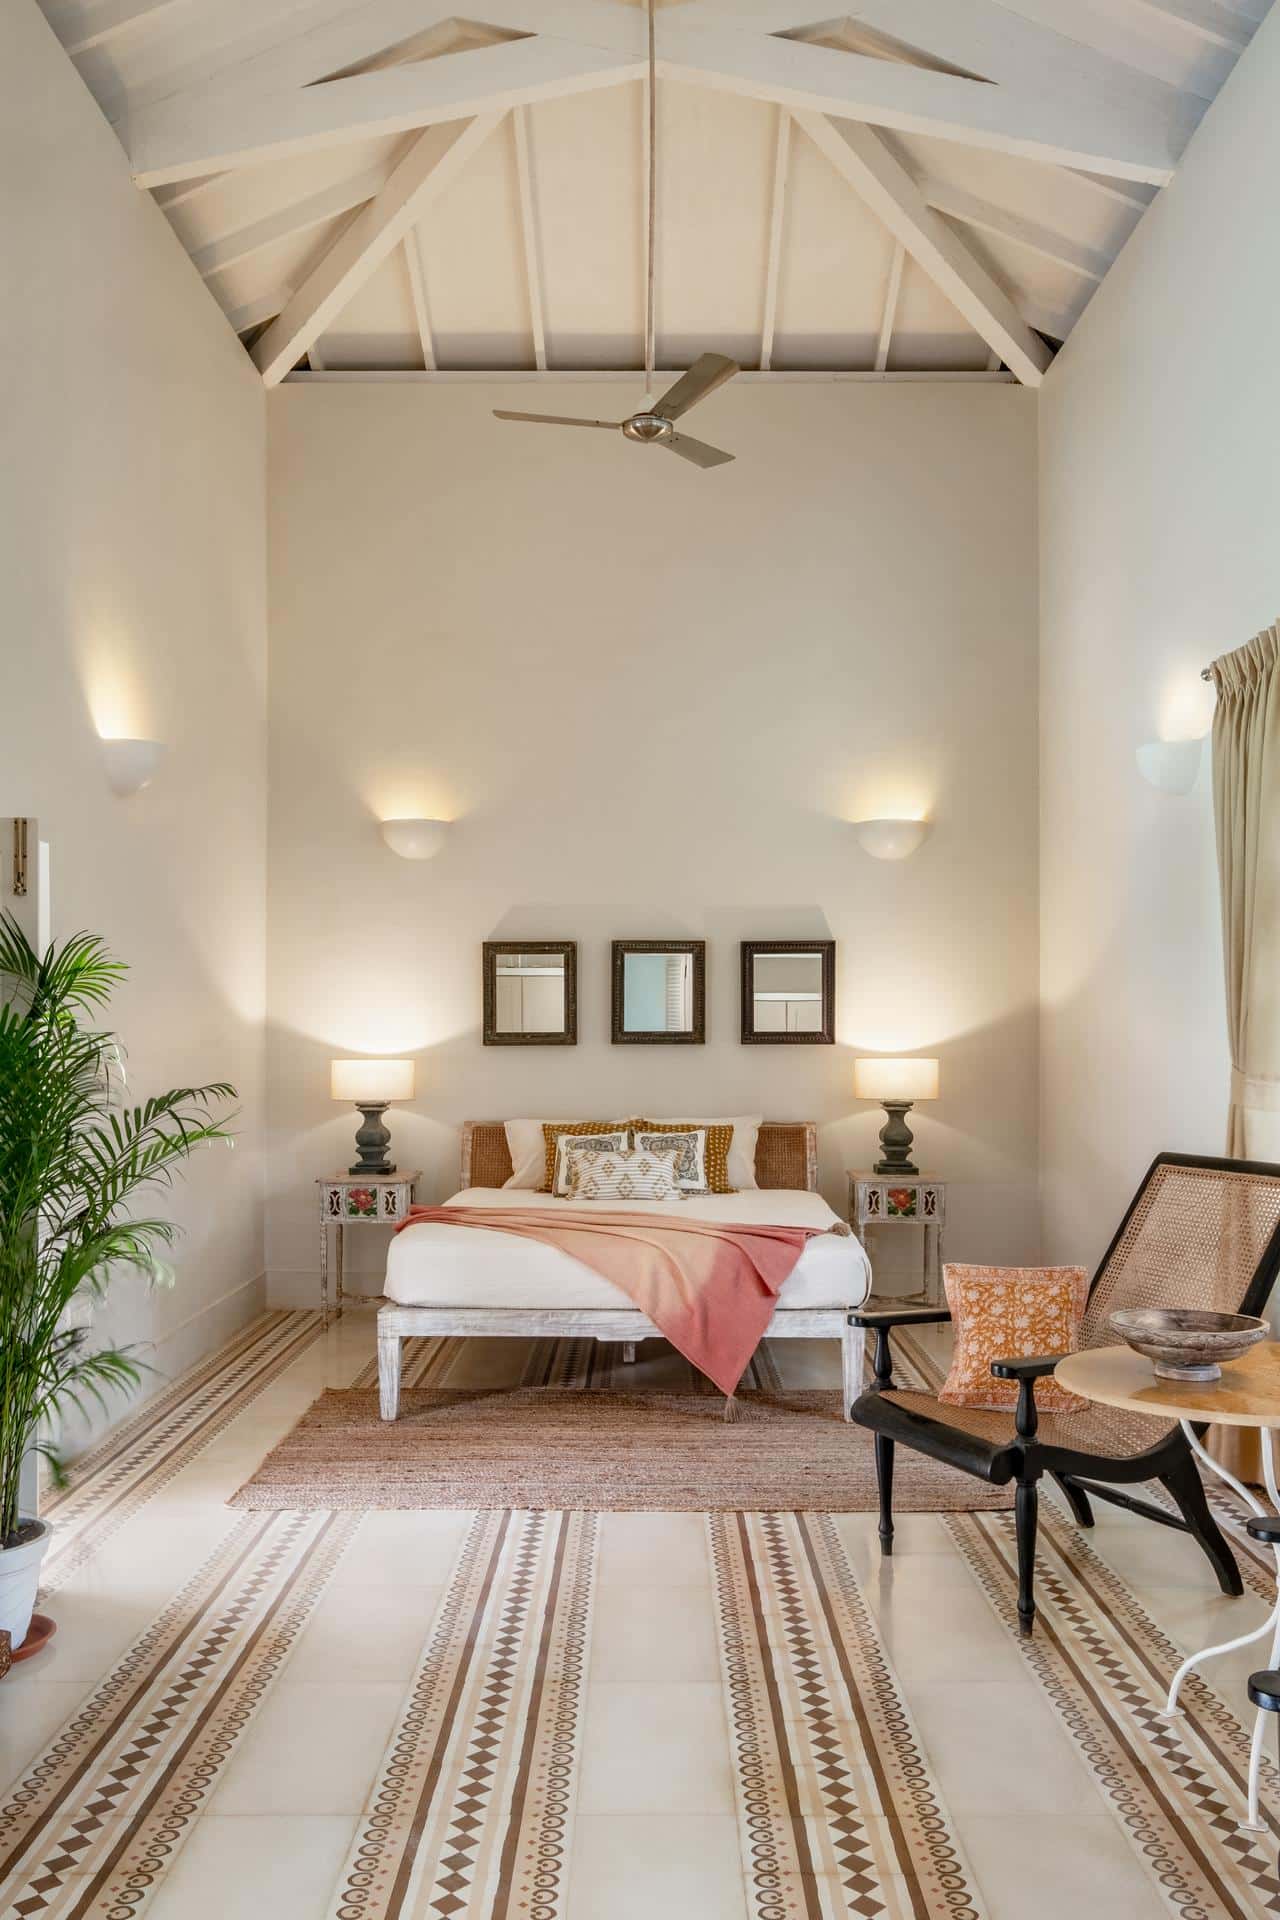 Villa Azul - Villas for Sale in North Goa - Elegant Bedroom View